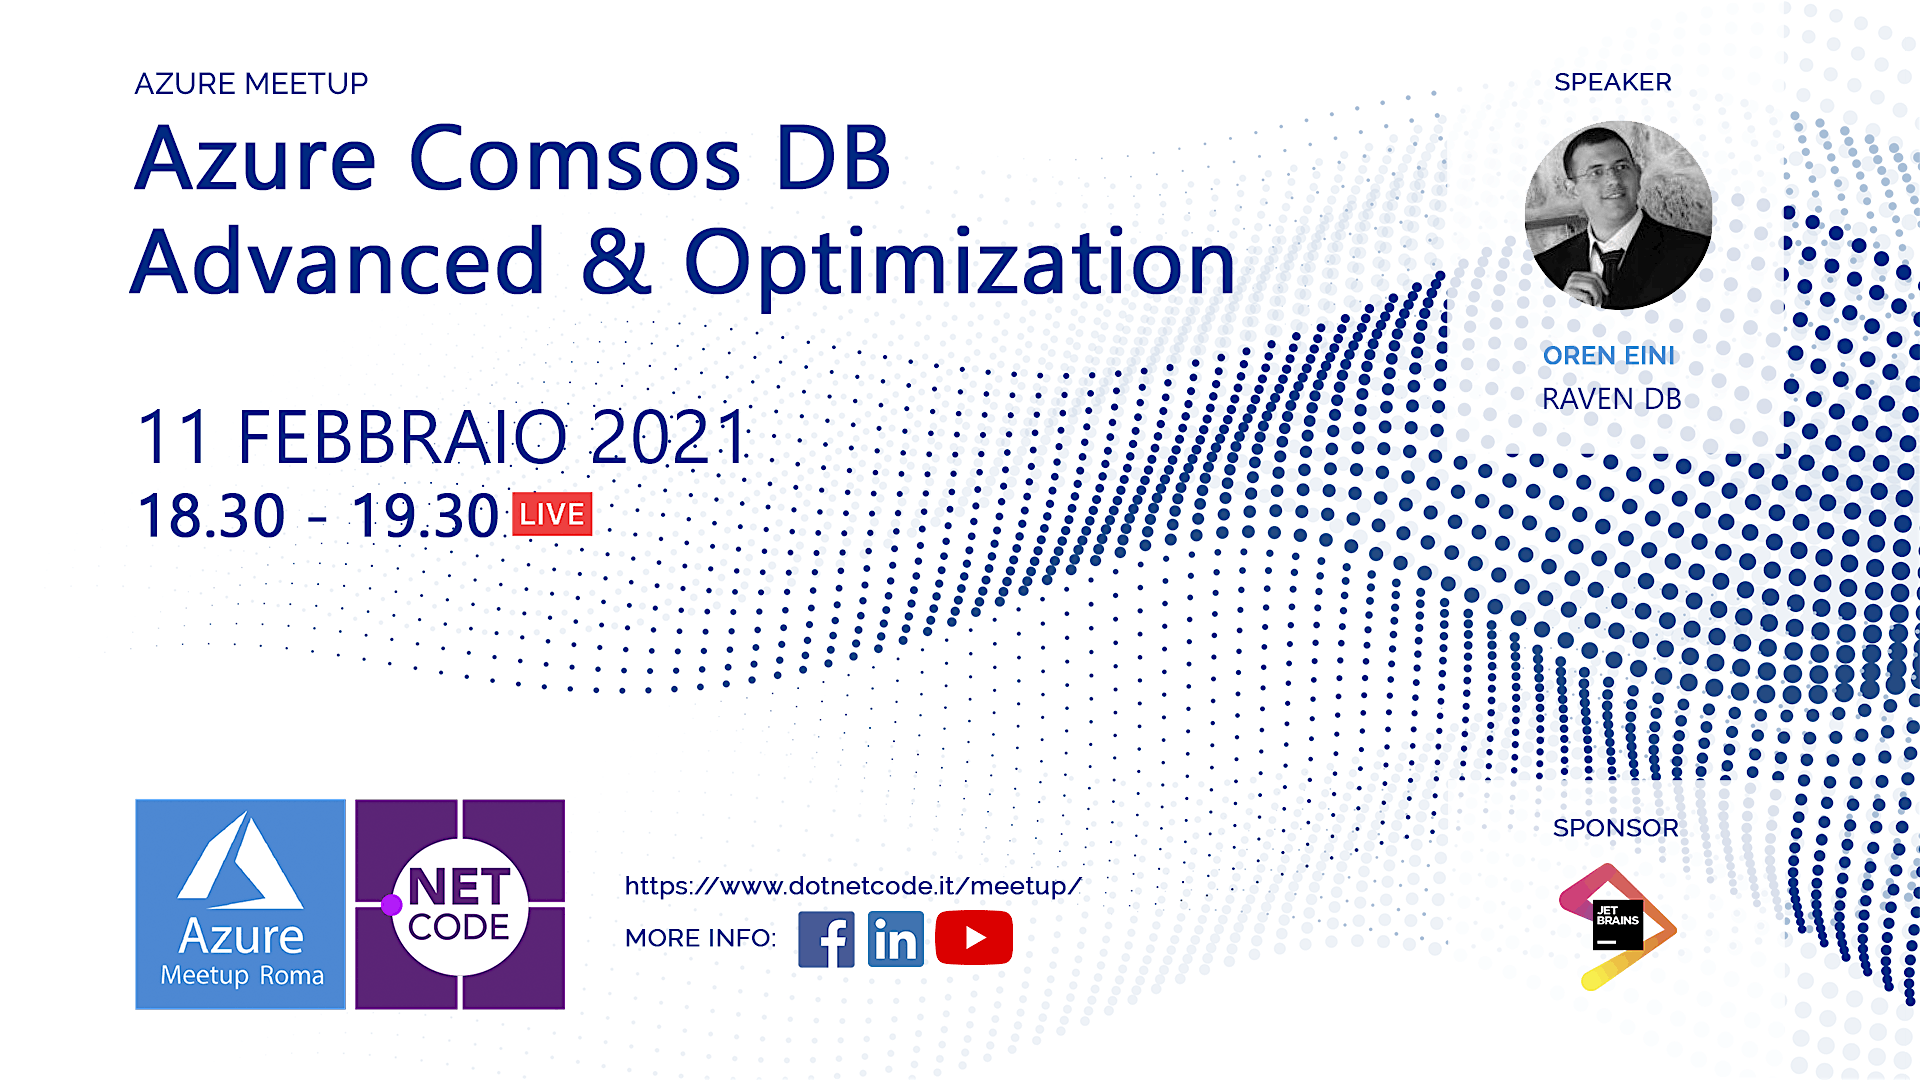 Azure Meetup: Azure Comsos DB Advanced & Optimization